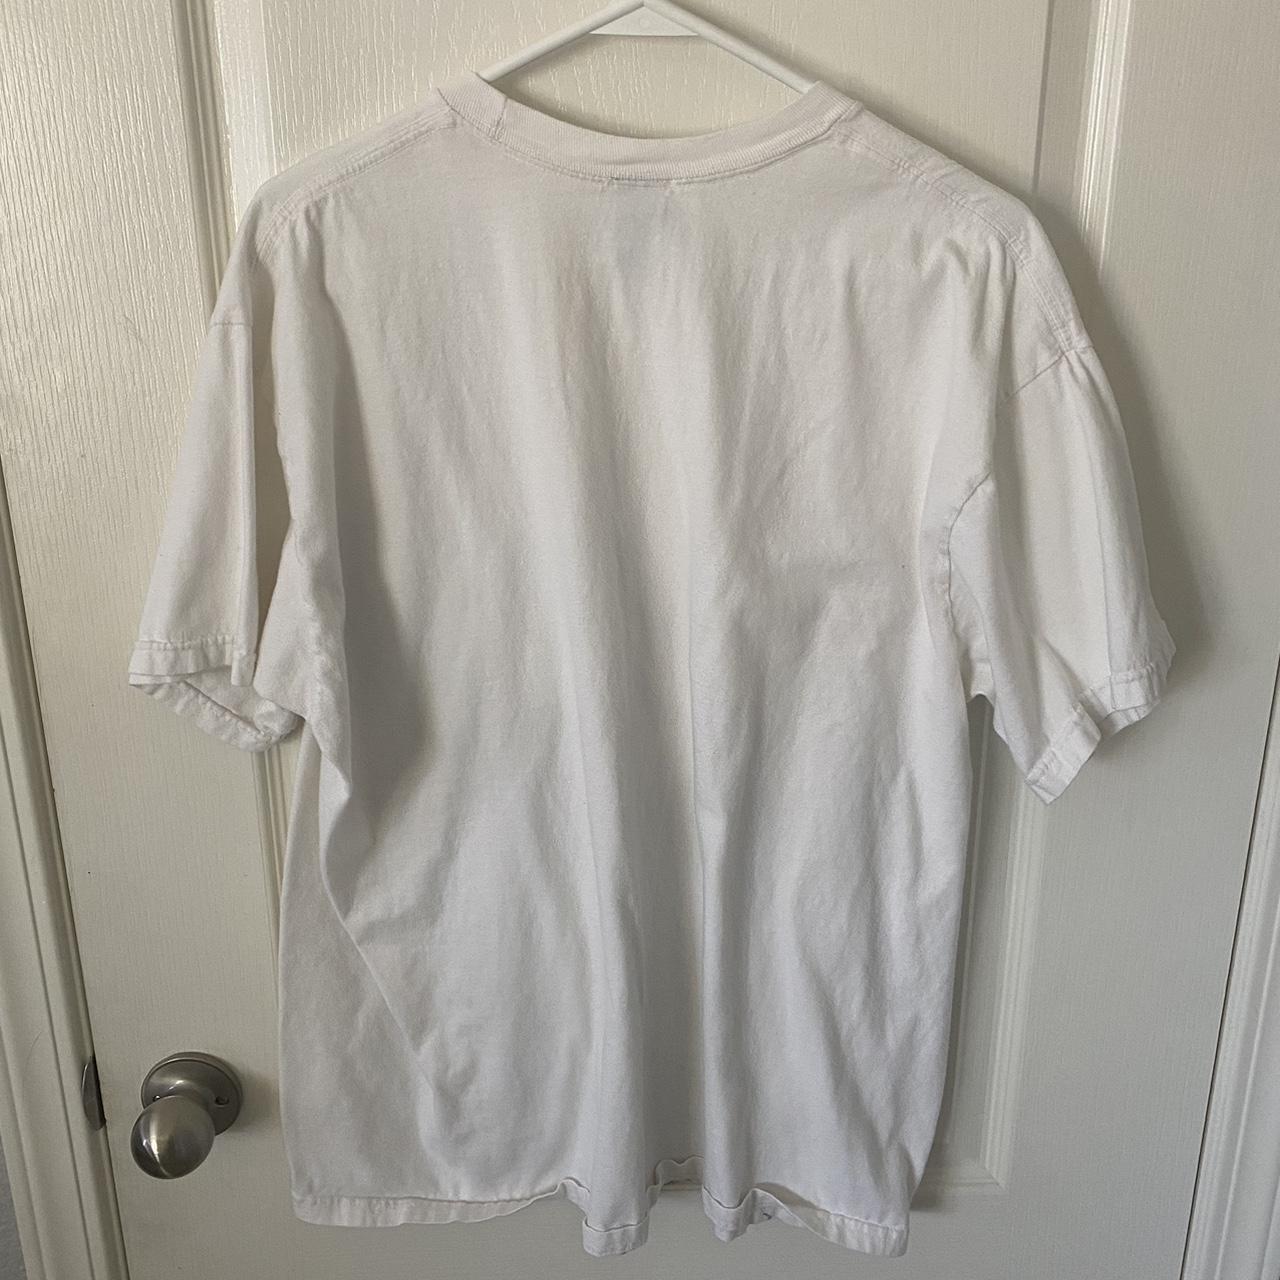 OMOCAT Men's White and Grey T-shirt (2)